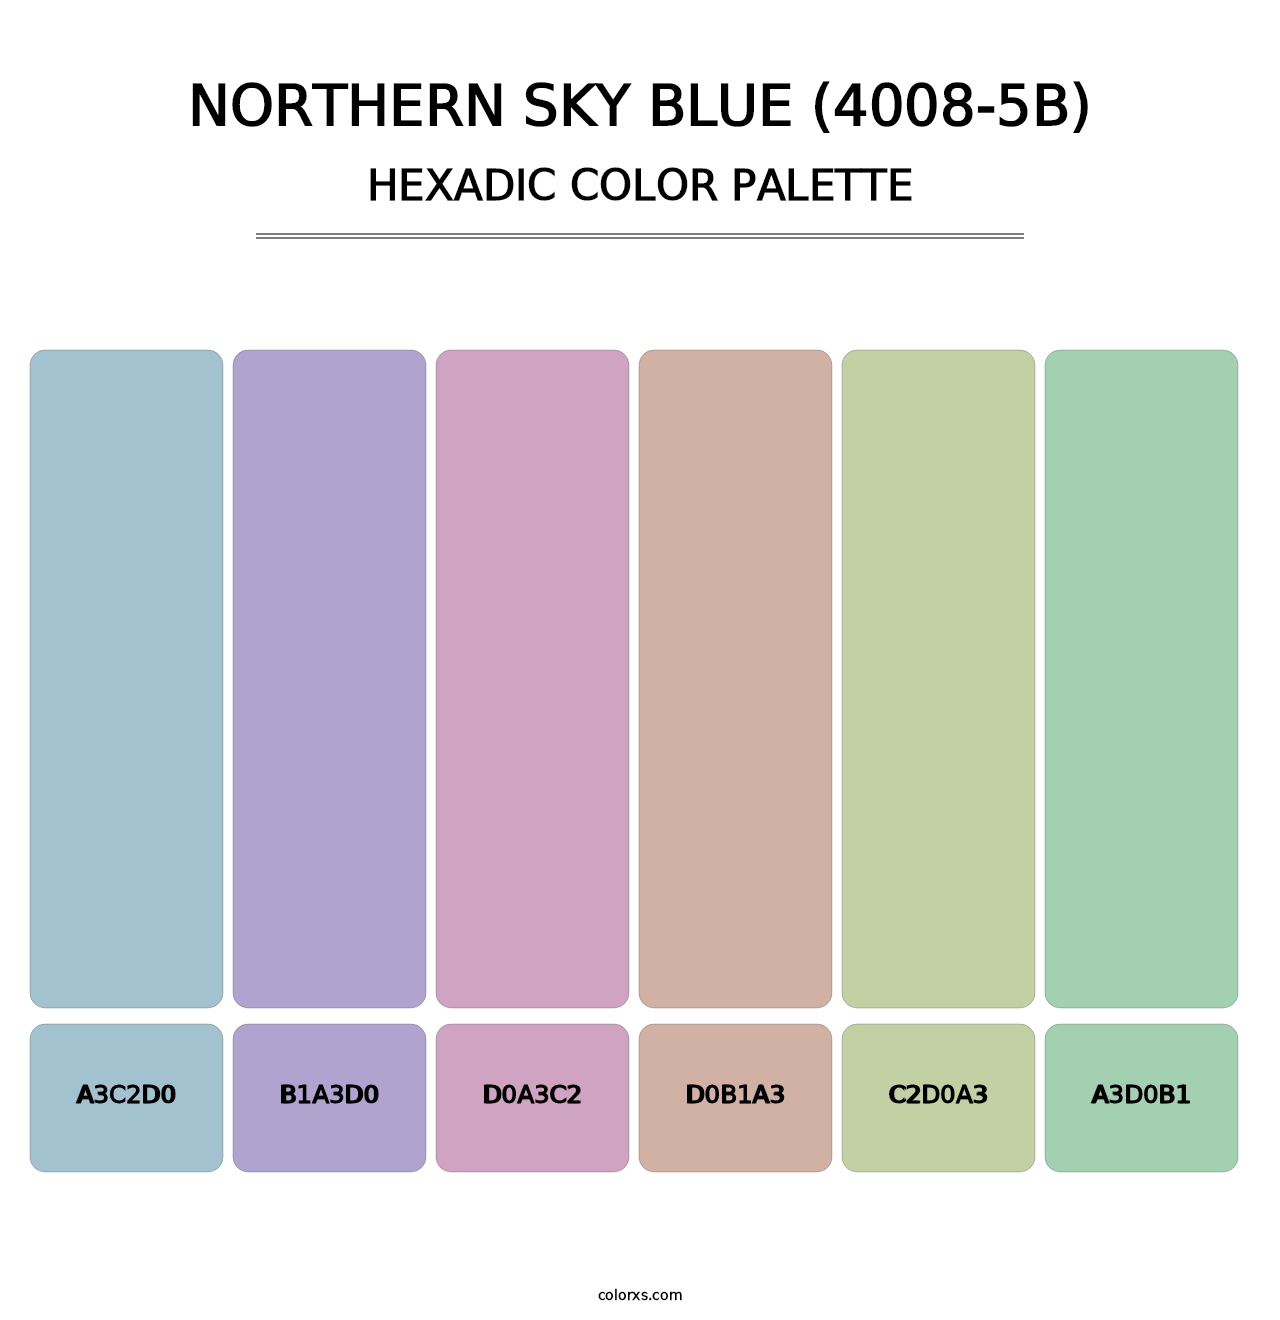 Northern Sky Blue (4008-5B) - Hexadic Color Palette